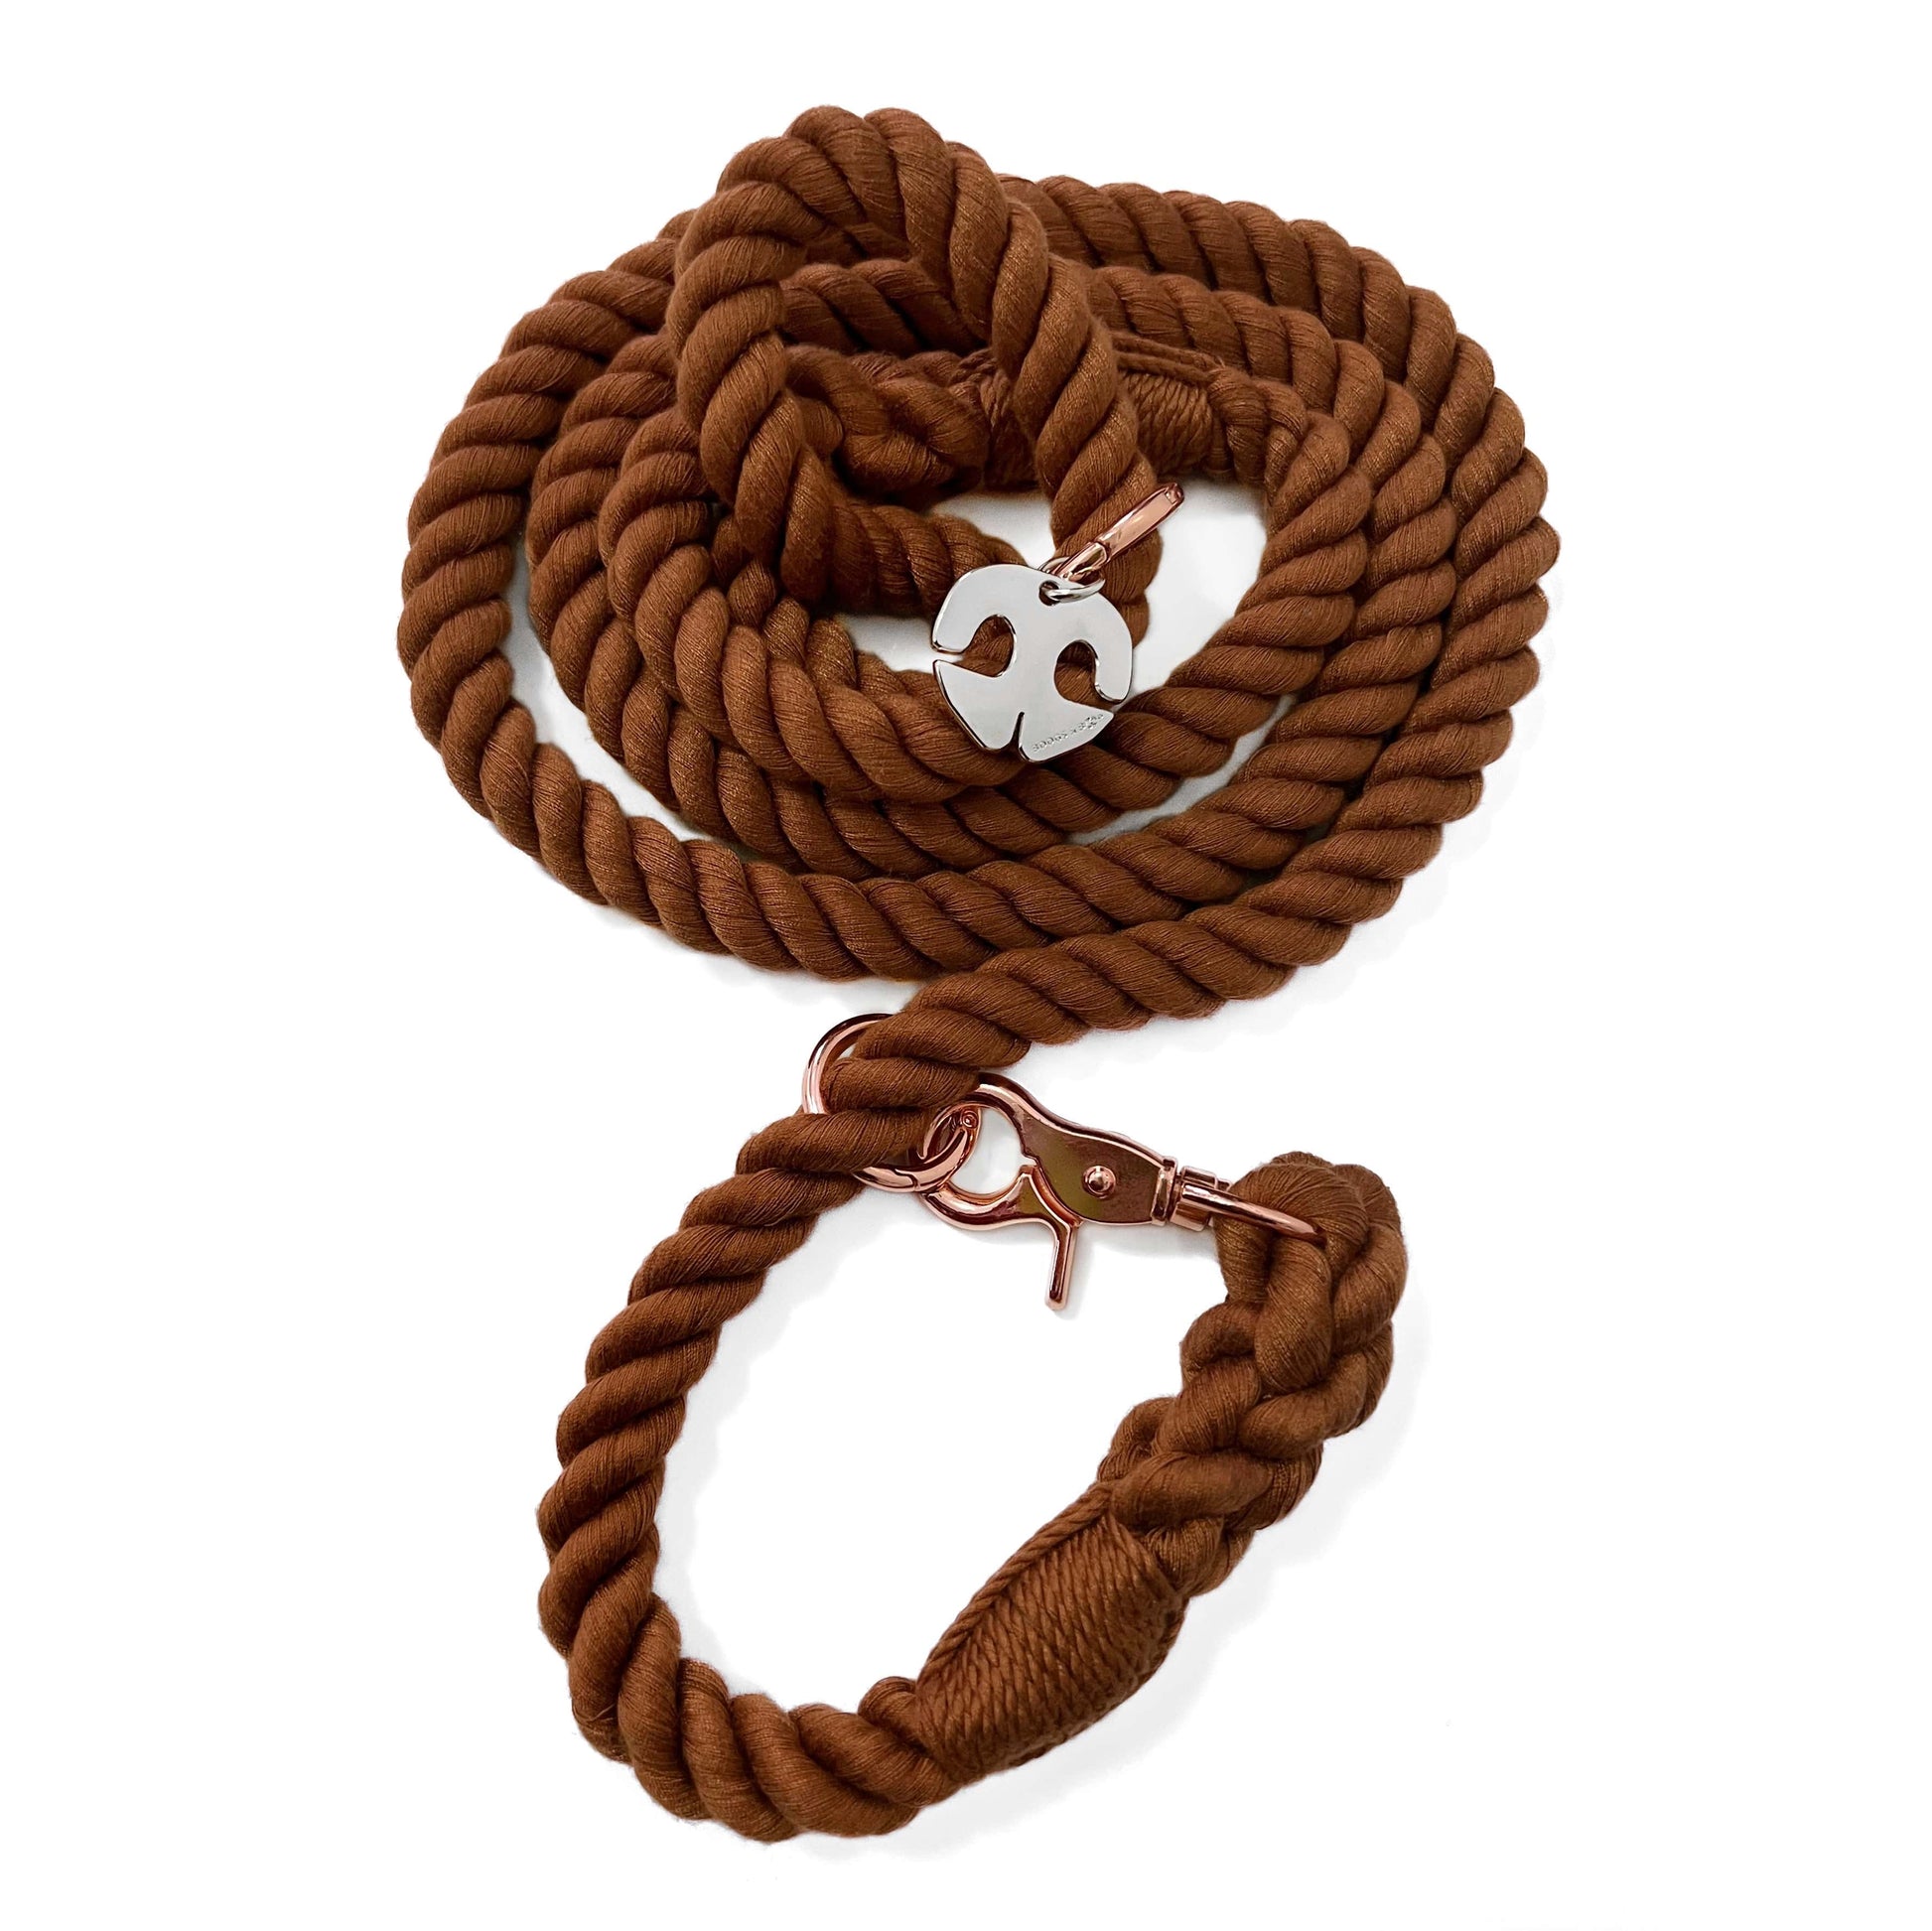 Rope Dog Leash - Walnut Brown